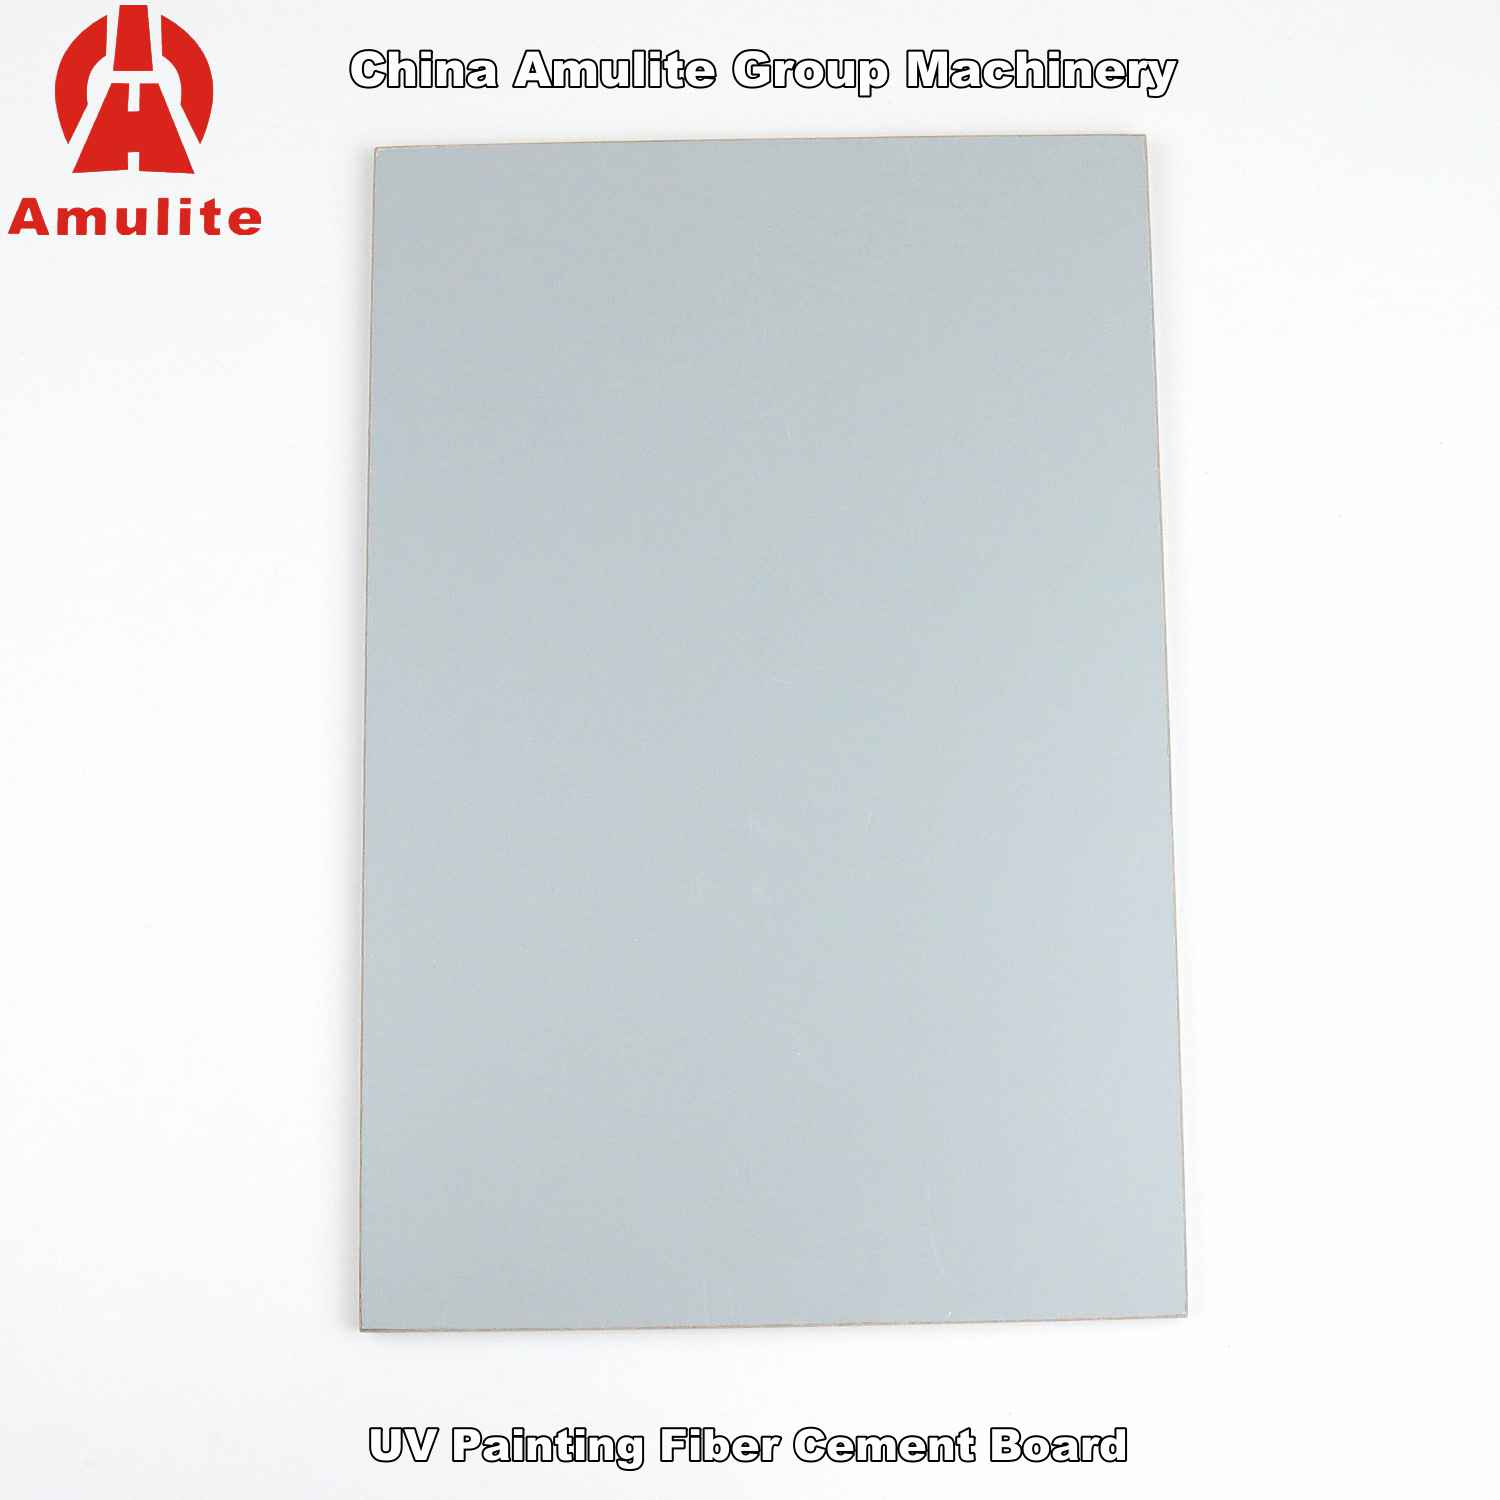 UV Painting Fiber Cement Board (19)